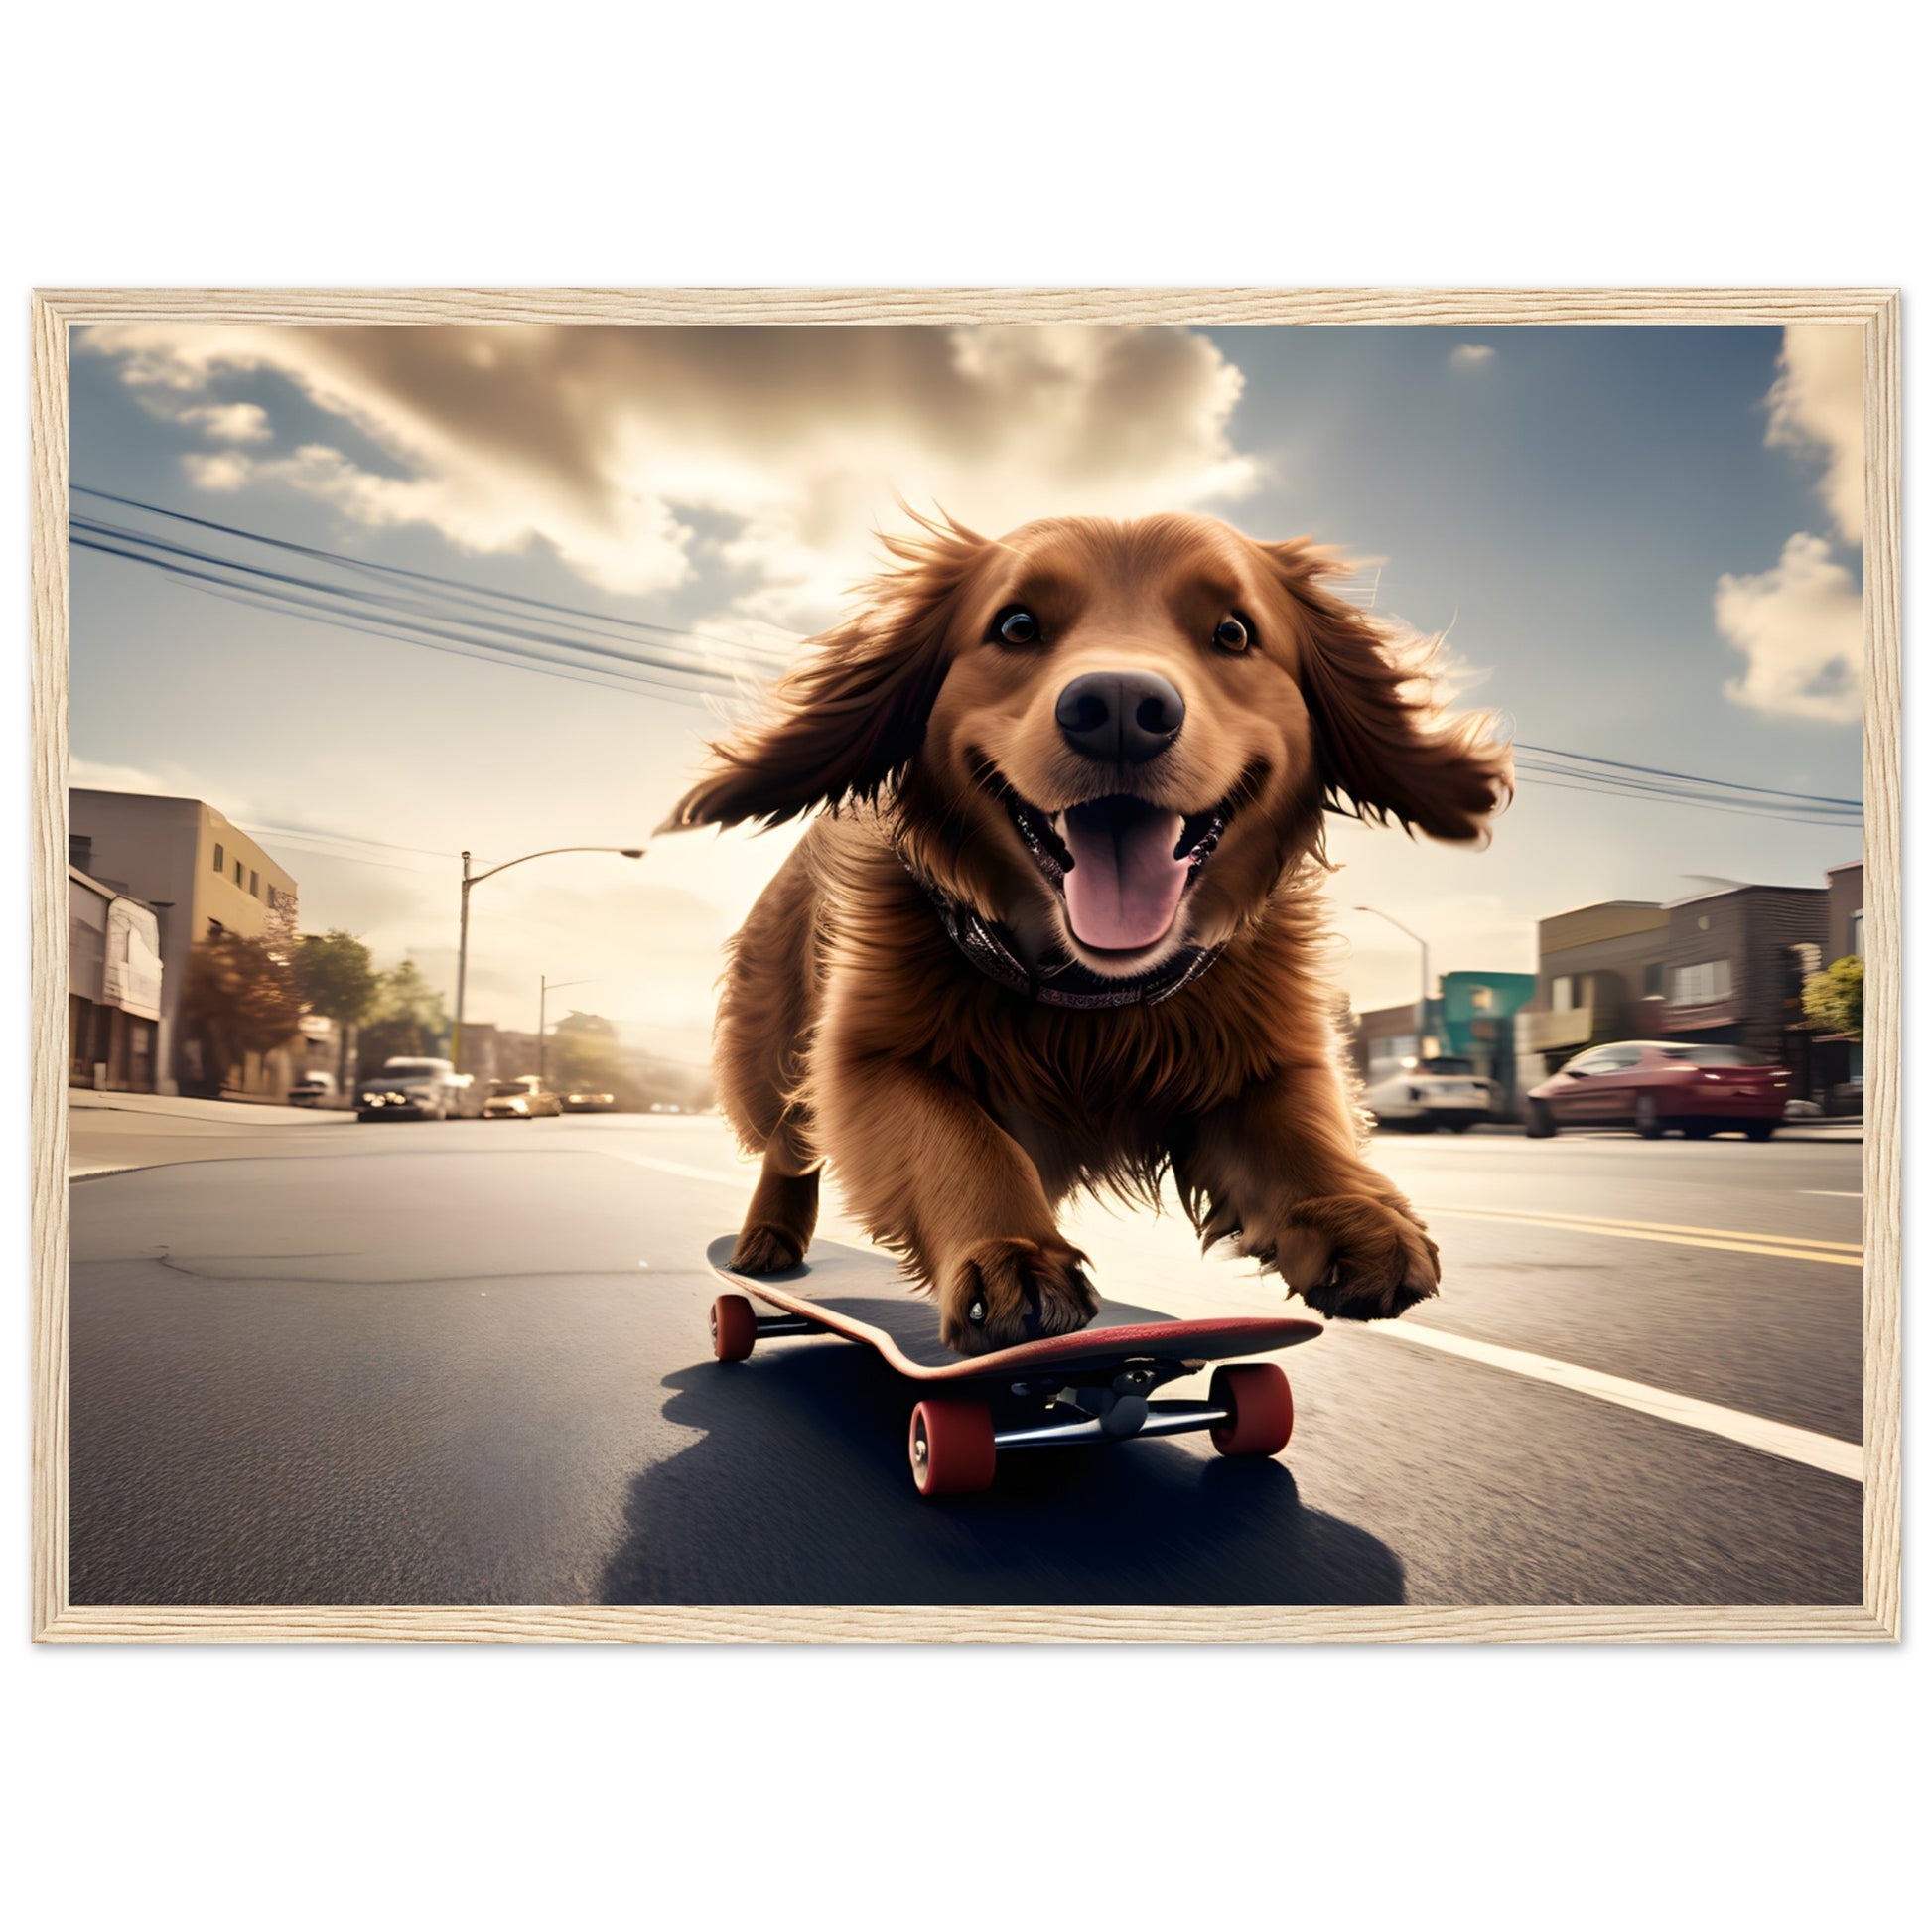 Dog on Skateboard